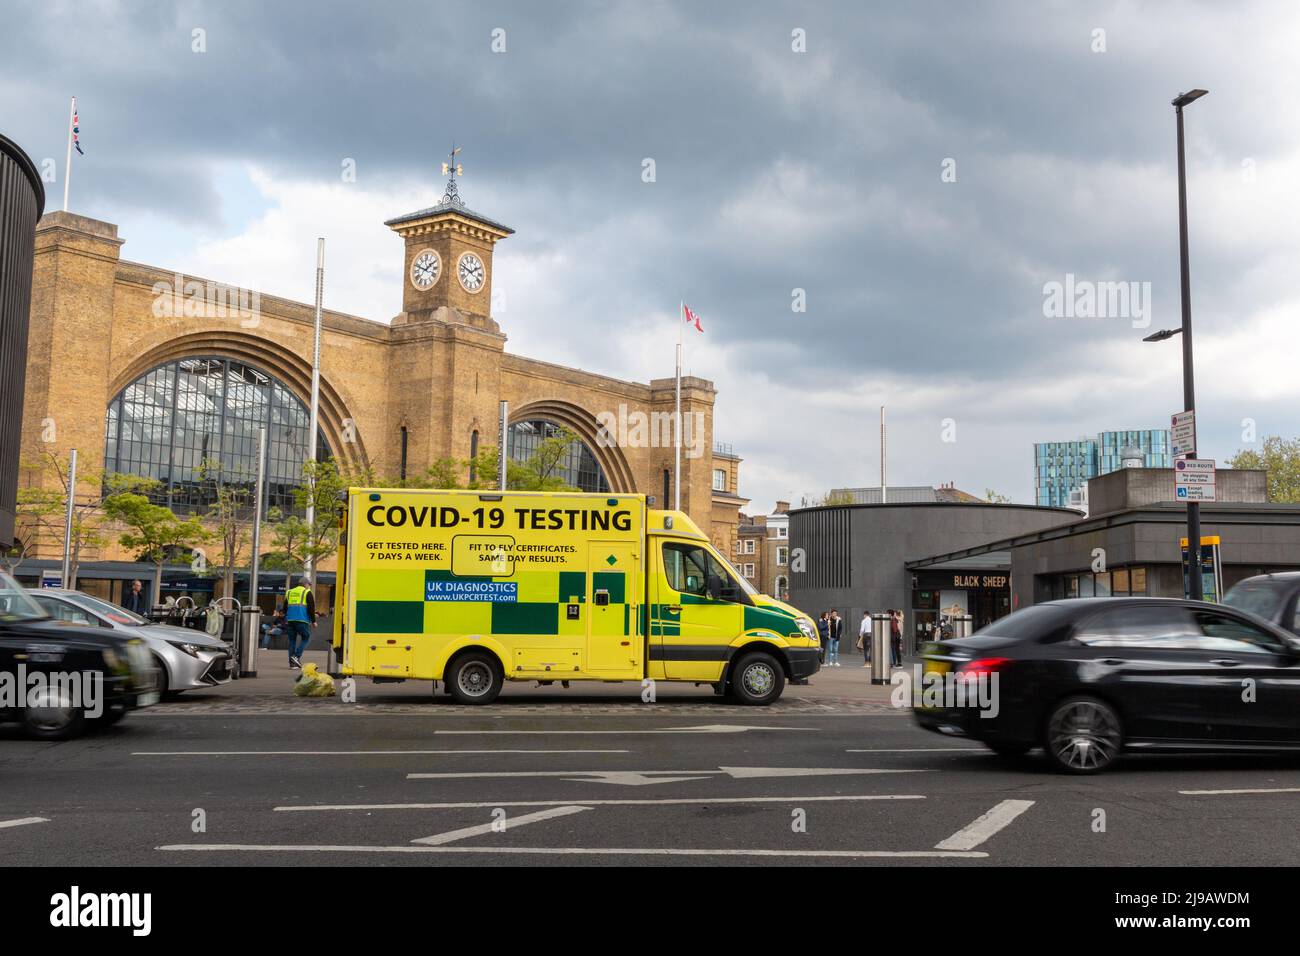 An ambulance providing Covid-19 testing is parked outside Kings Cross train station. London, UK Stock Photo